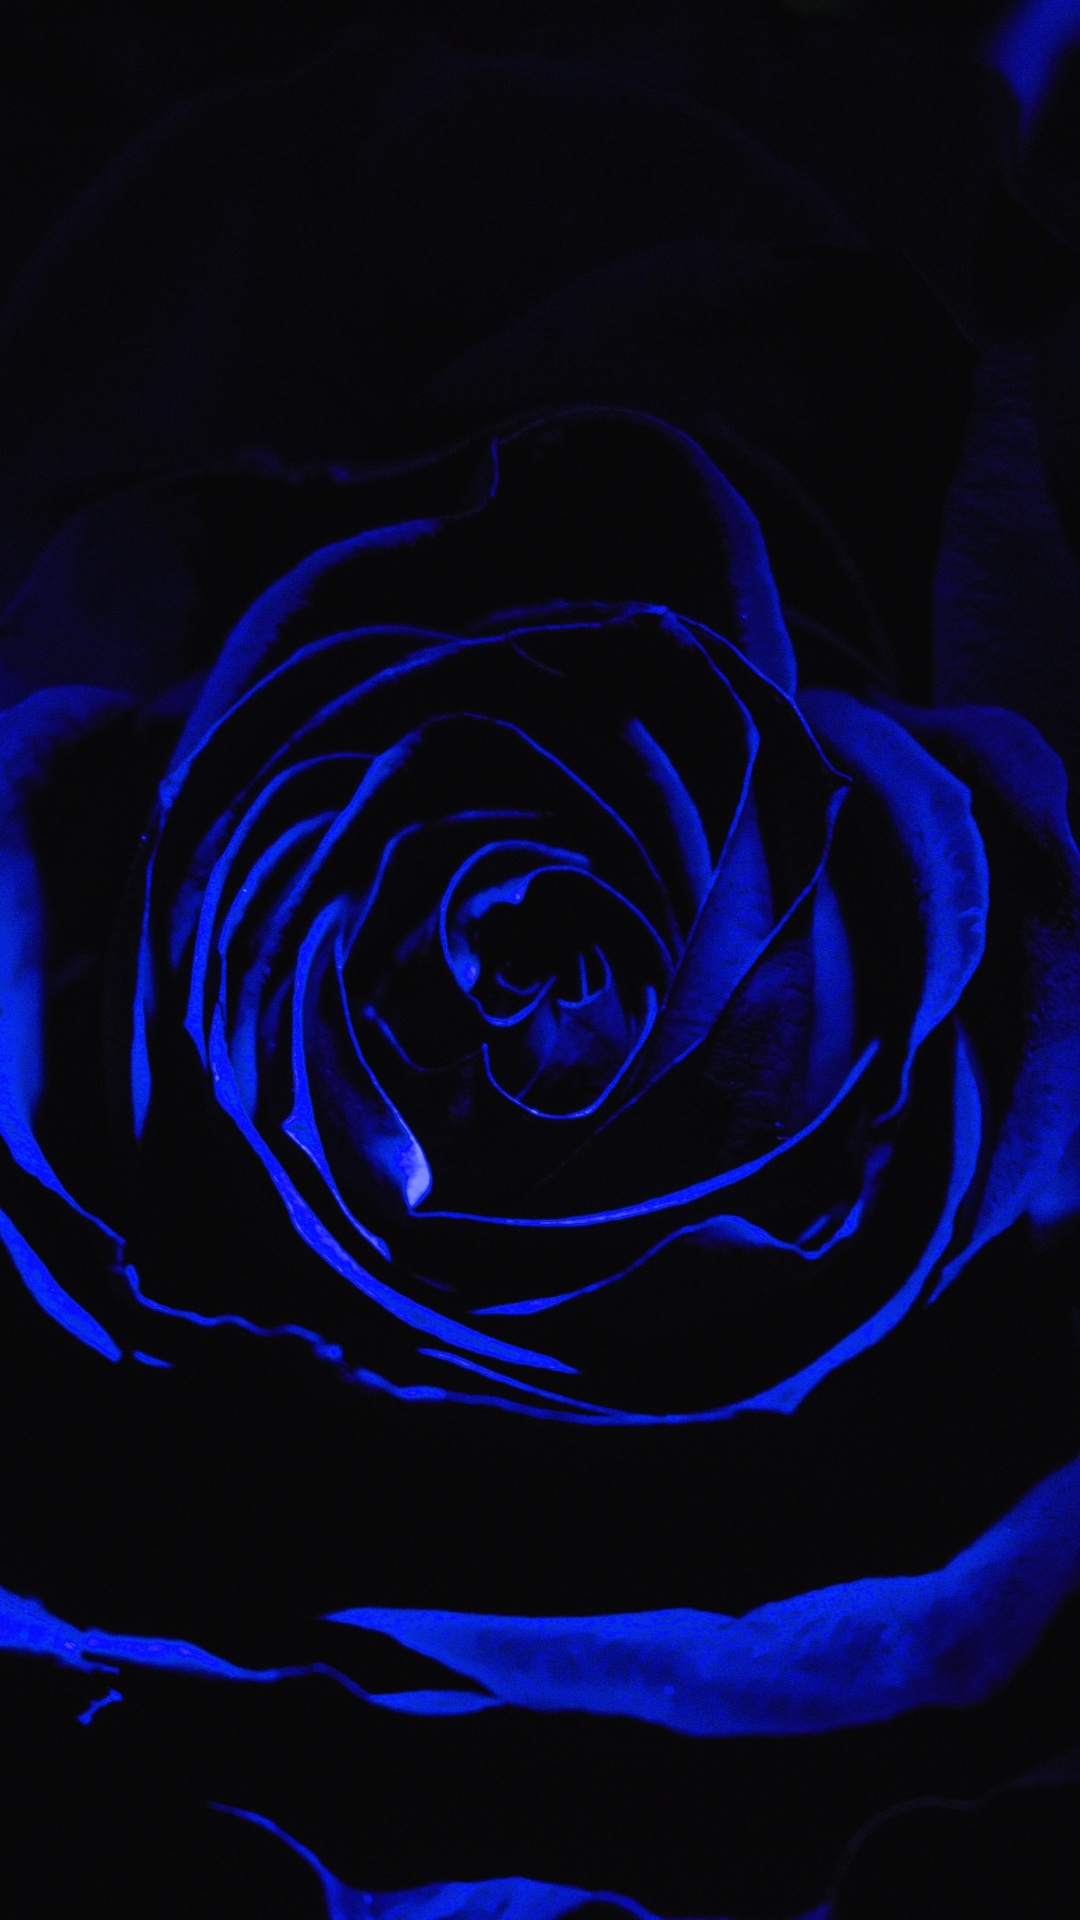 Blaue Rose in Nahaufnahmen. Wallpaper in 1080x1920 Resolution